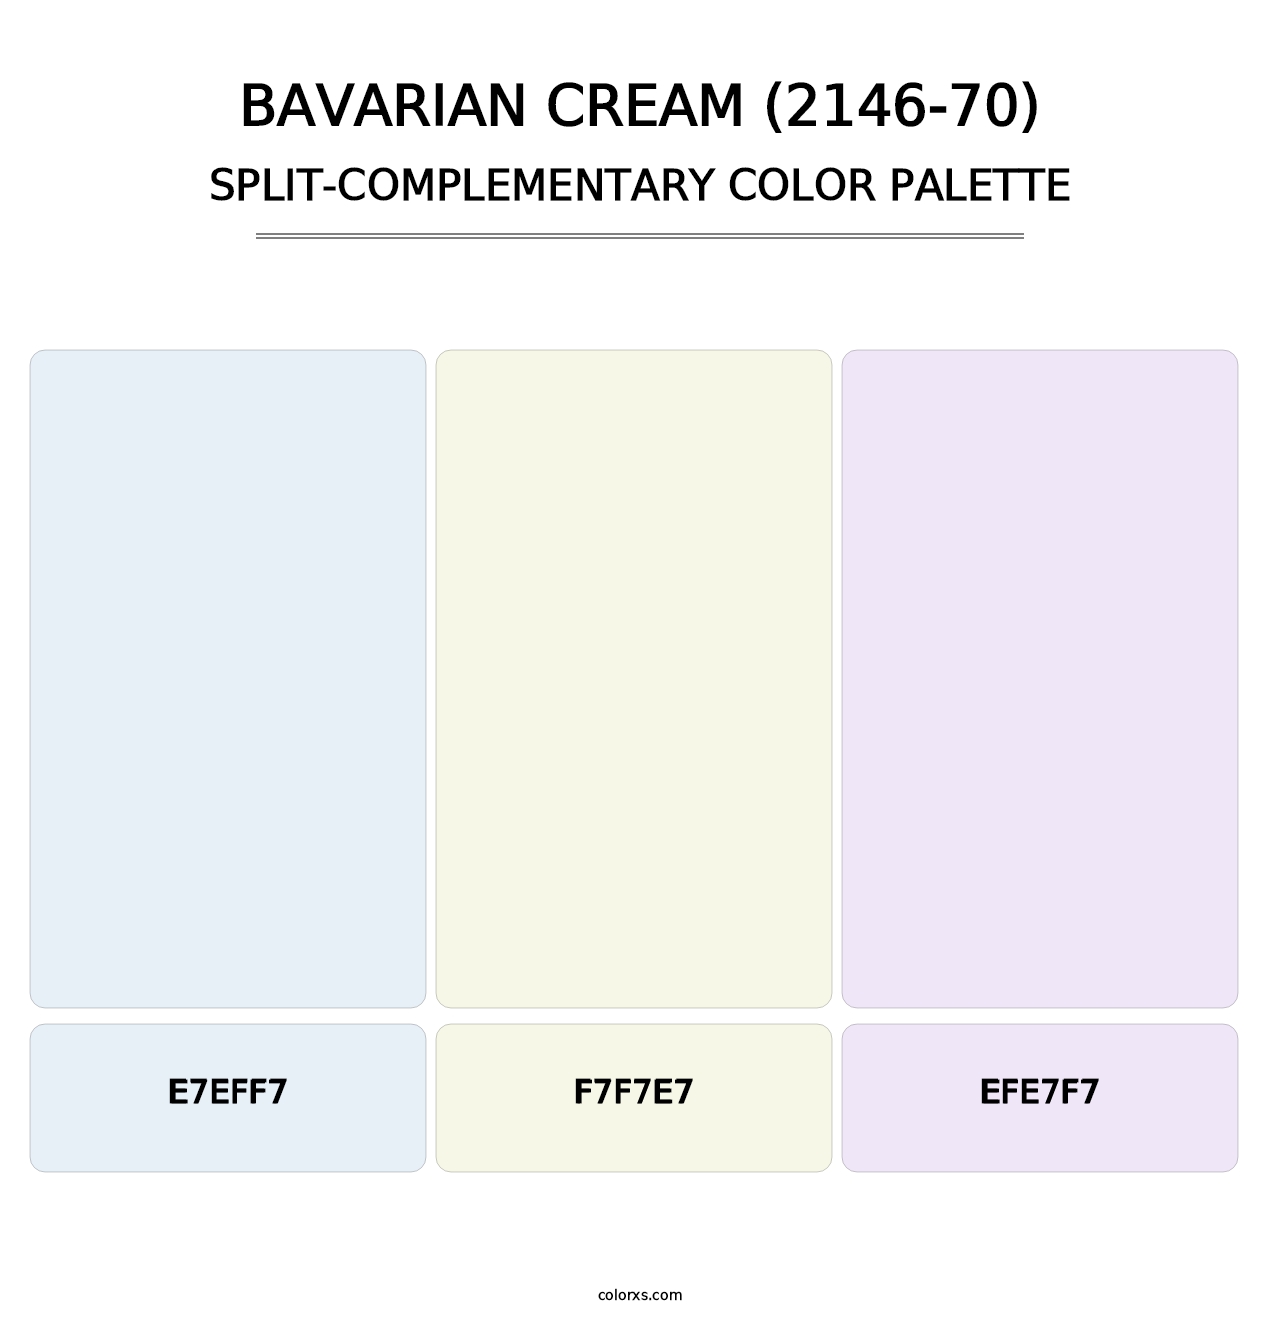 Bavarian Cream (2146-70) - Split-Complementary Color Palette